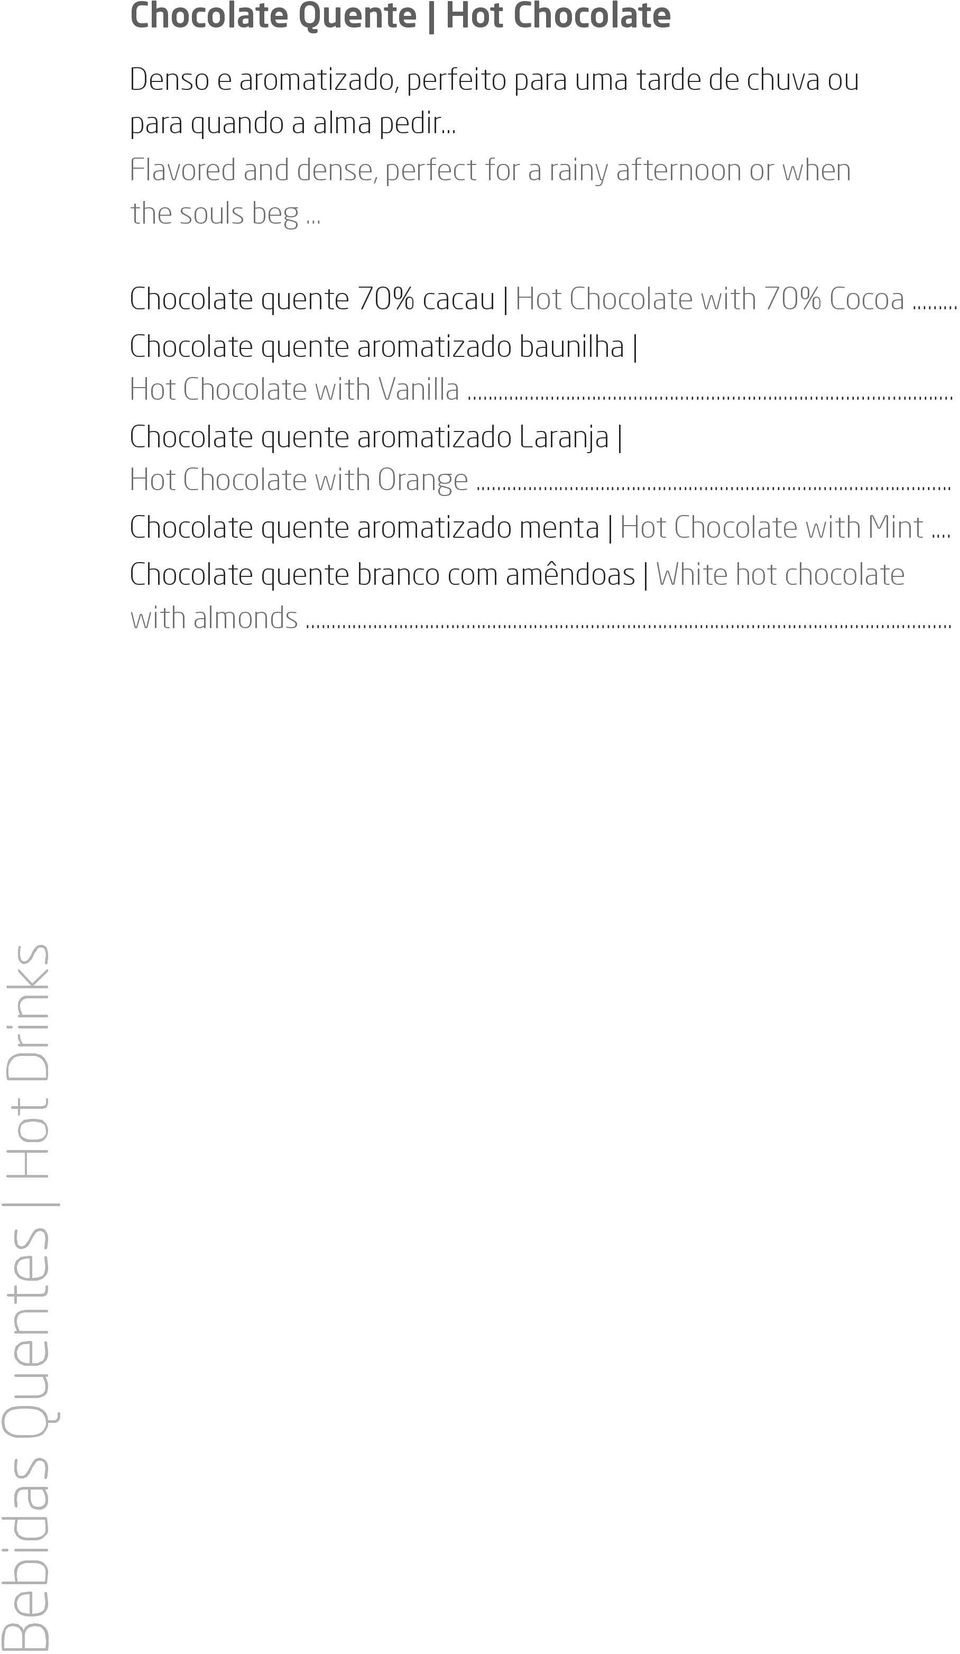 .. Chocolate quente aromatizado baunilha Hot Chocolate with Vanilla.